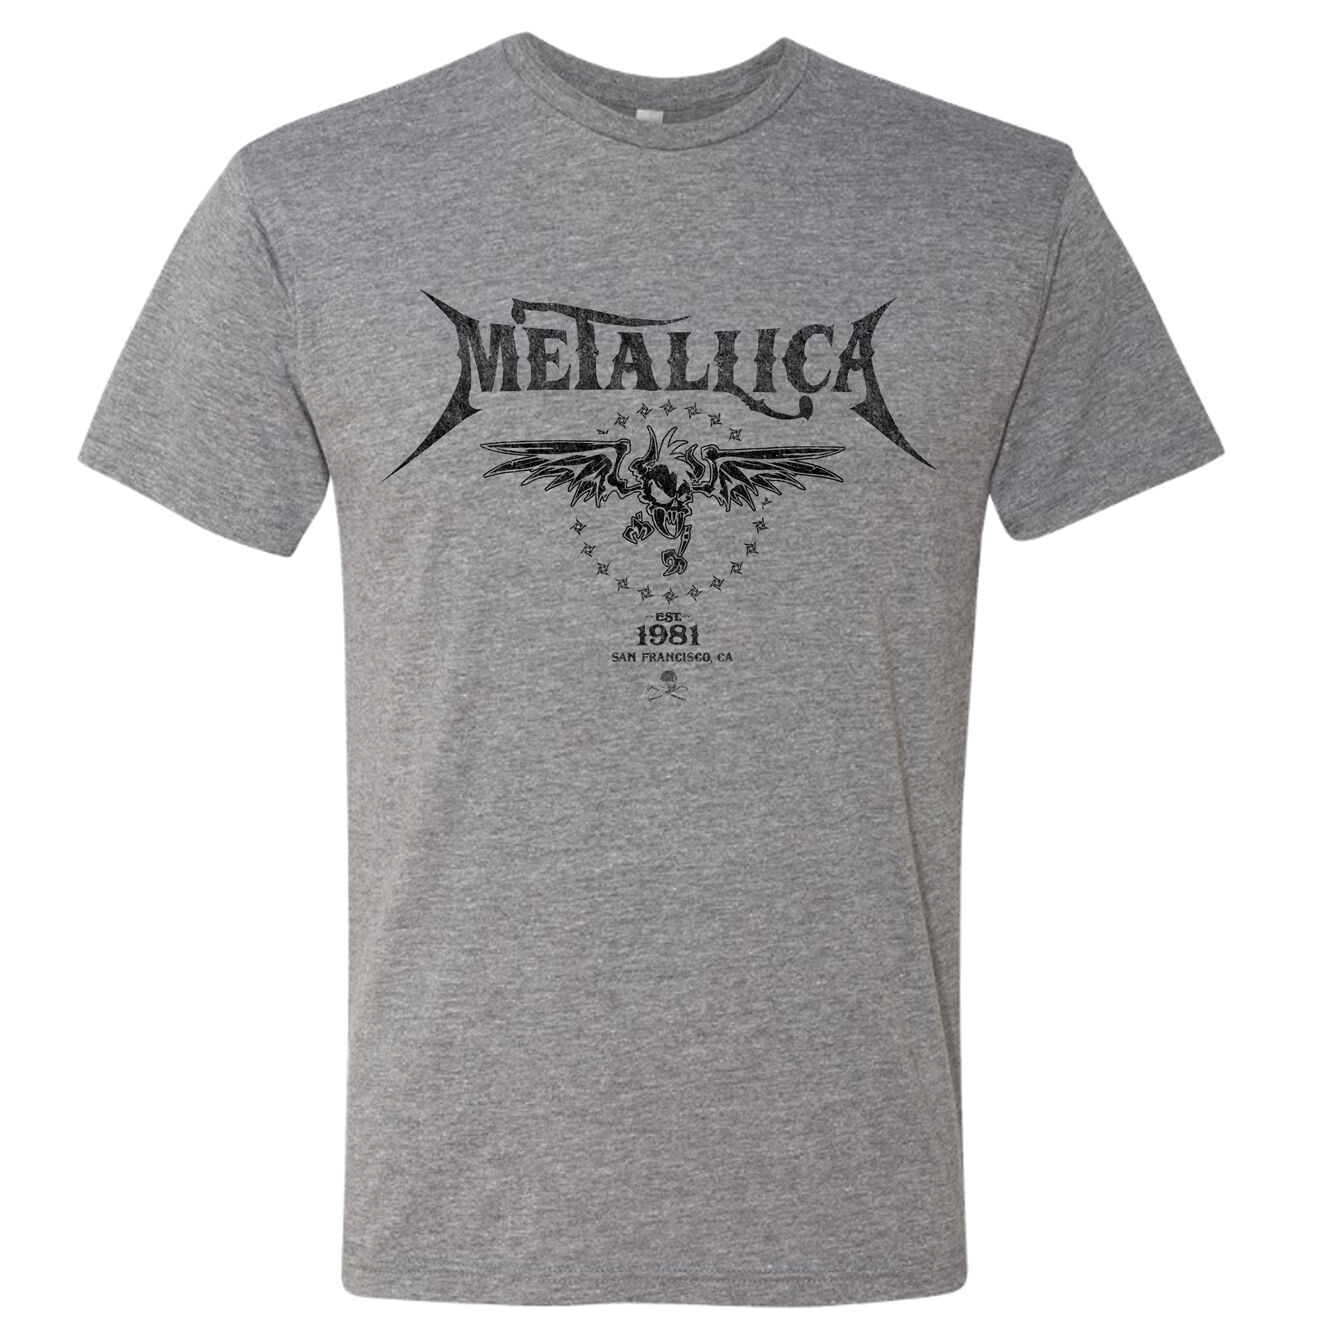 metallica t shirt canada